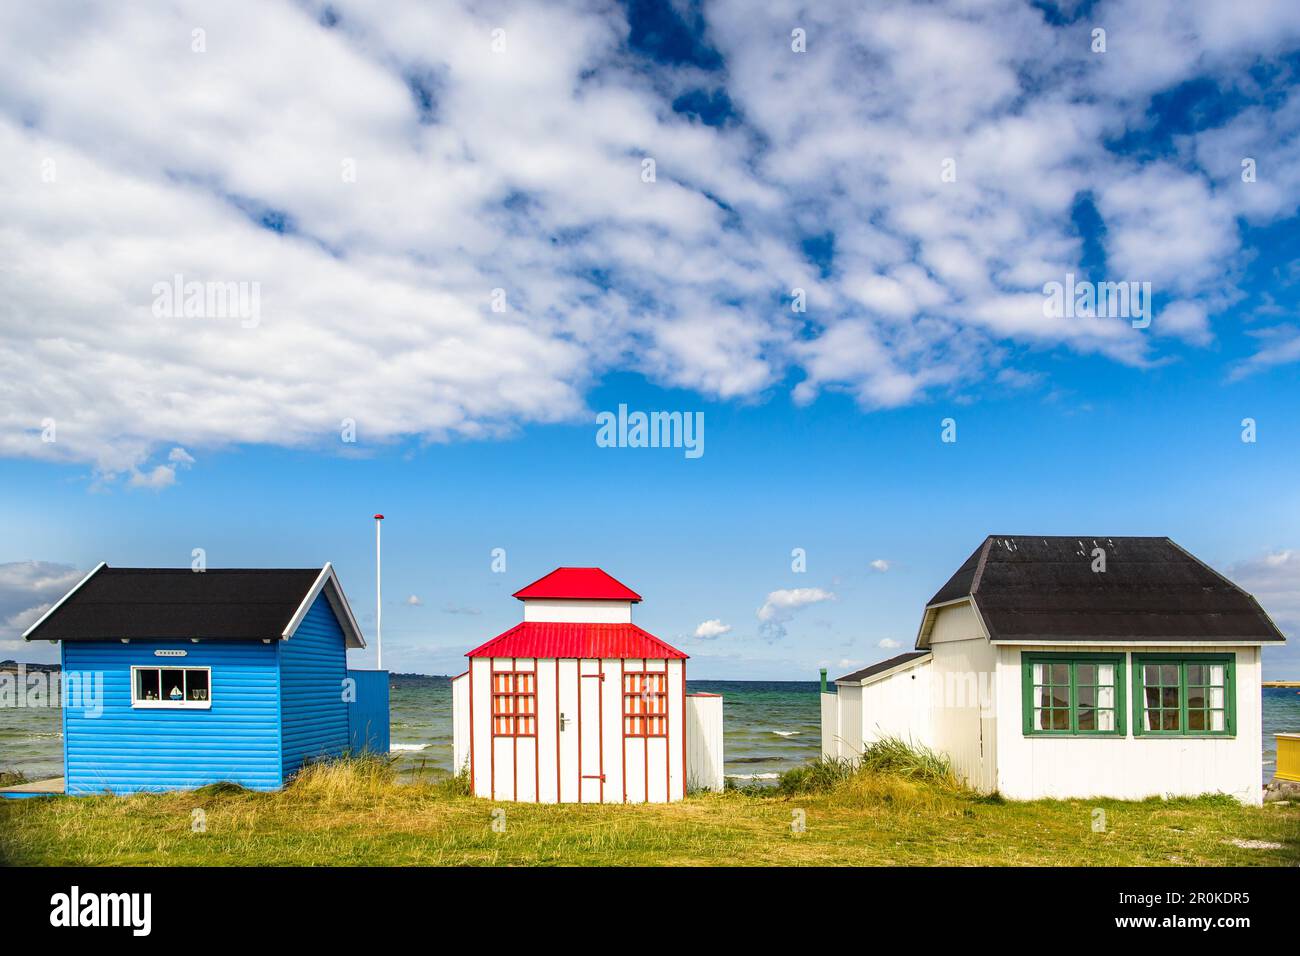 Strandhütten am Vester Beach, Aeroskobing, Isle of Aero, Dänemark Stockfoto